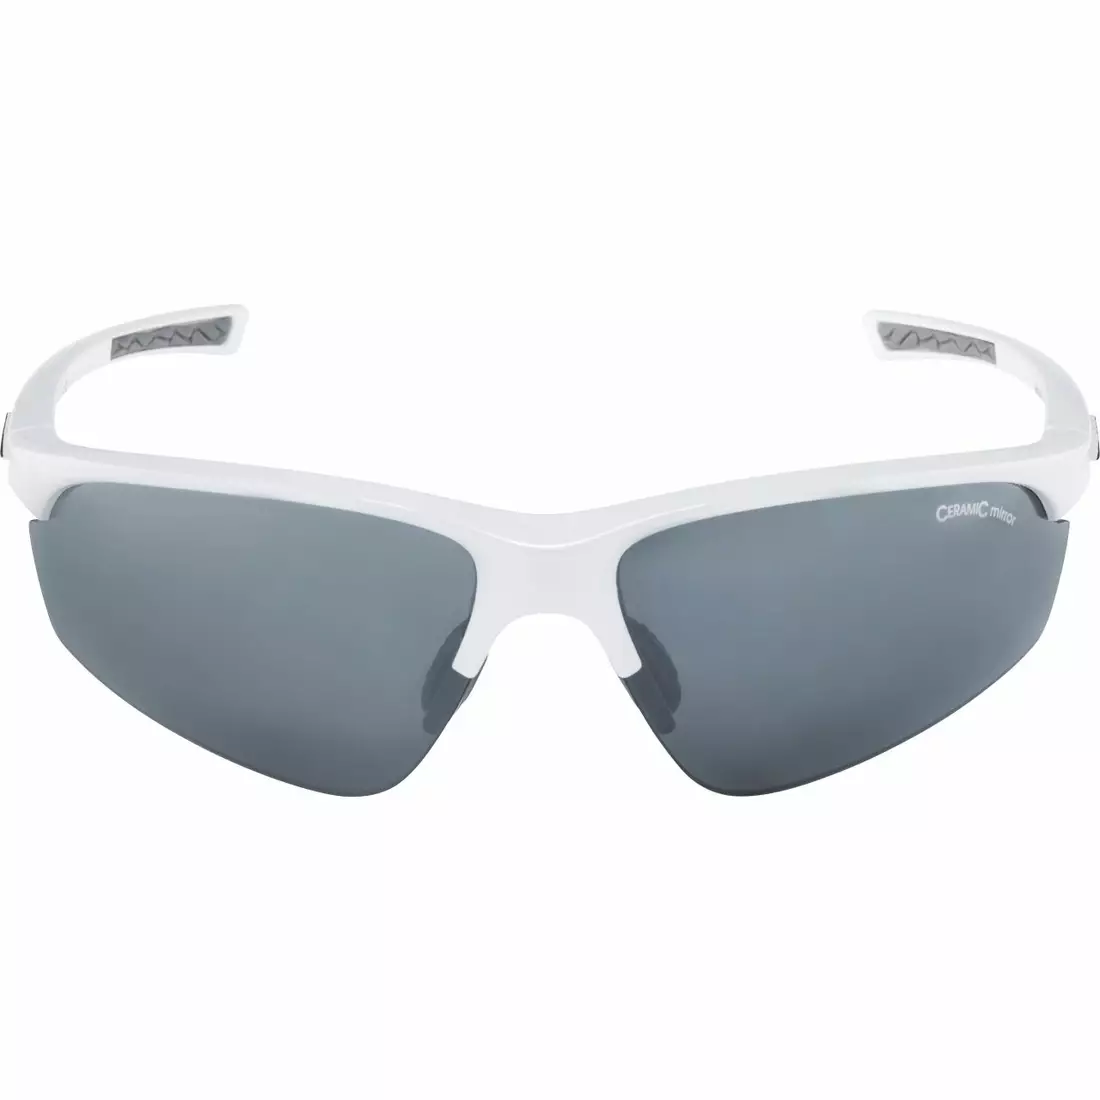 ALPINA ochelari sport 3 lentile interschimbabile TRI-EFFECT 2.0 WHITE BLK MIRR S3/CLEAR S0/ORANGE MIRR S2 A8604310